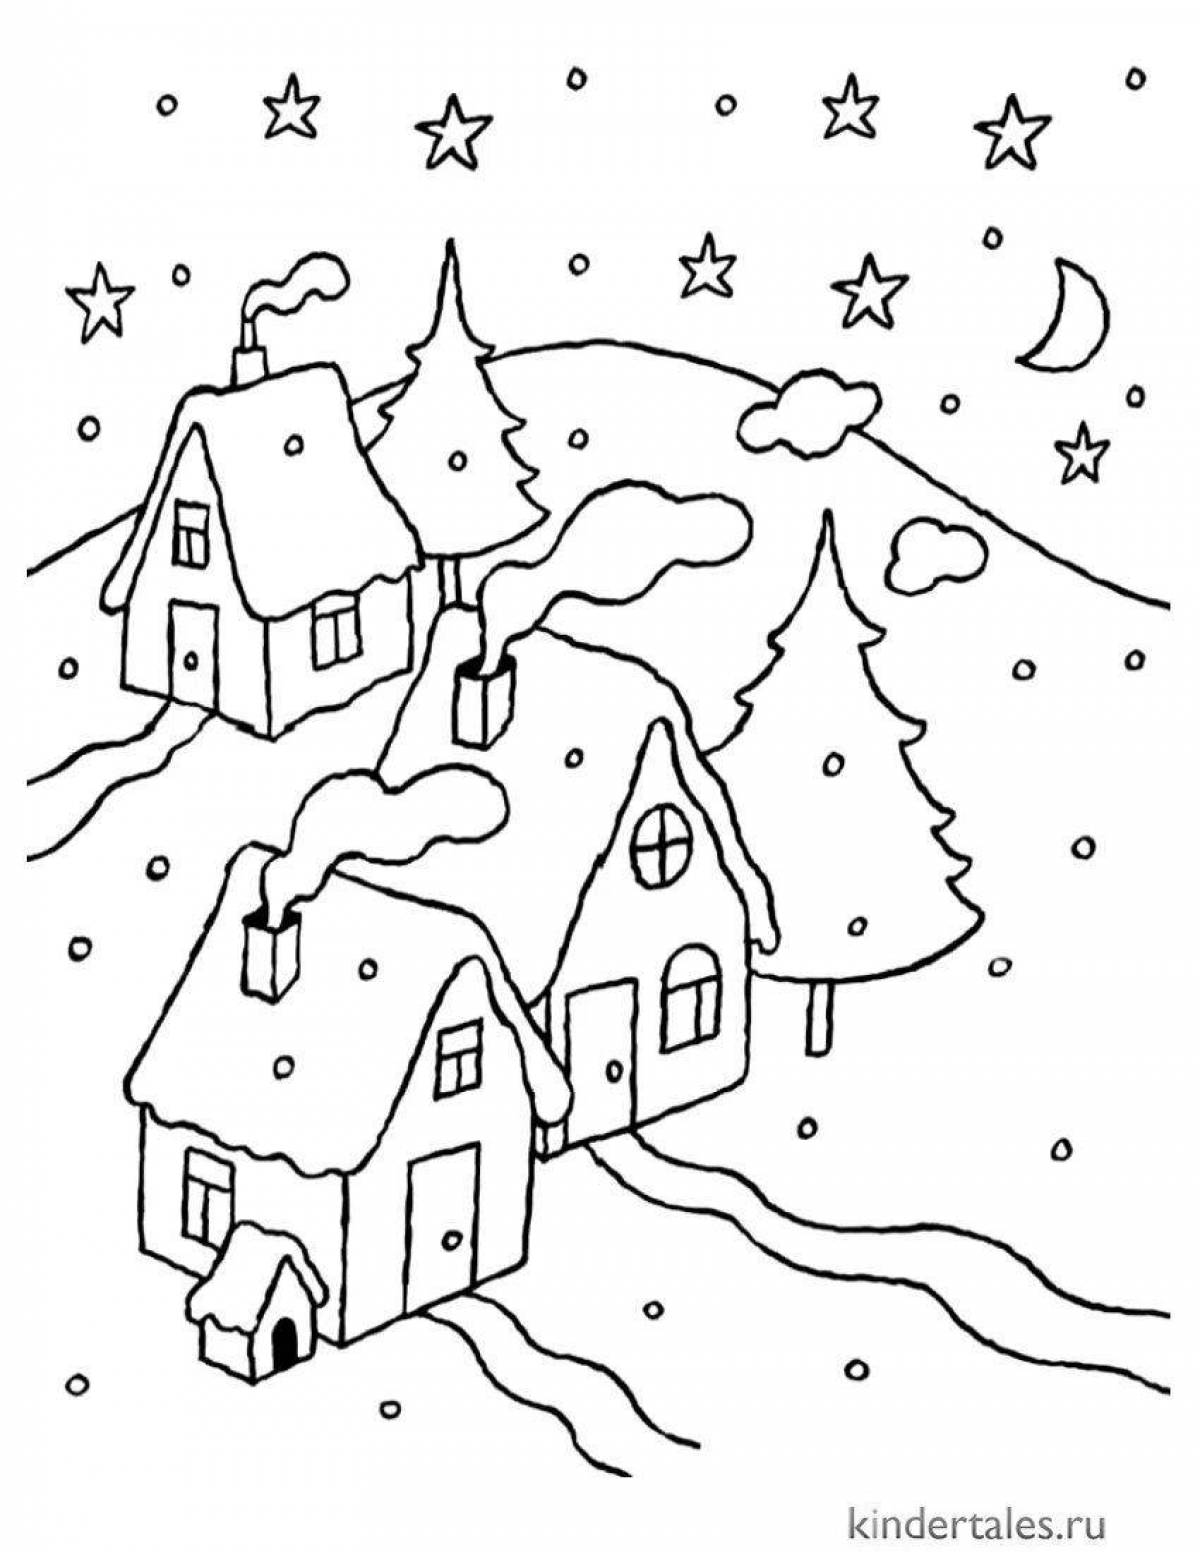 Coloring page snowy winter village